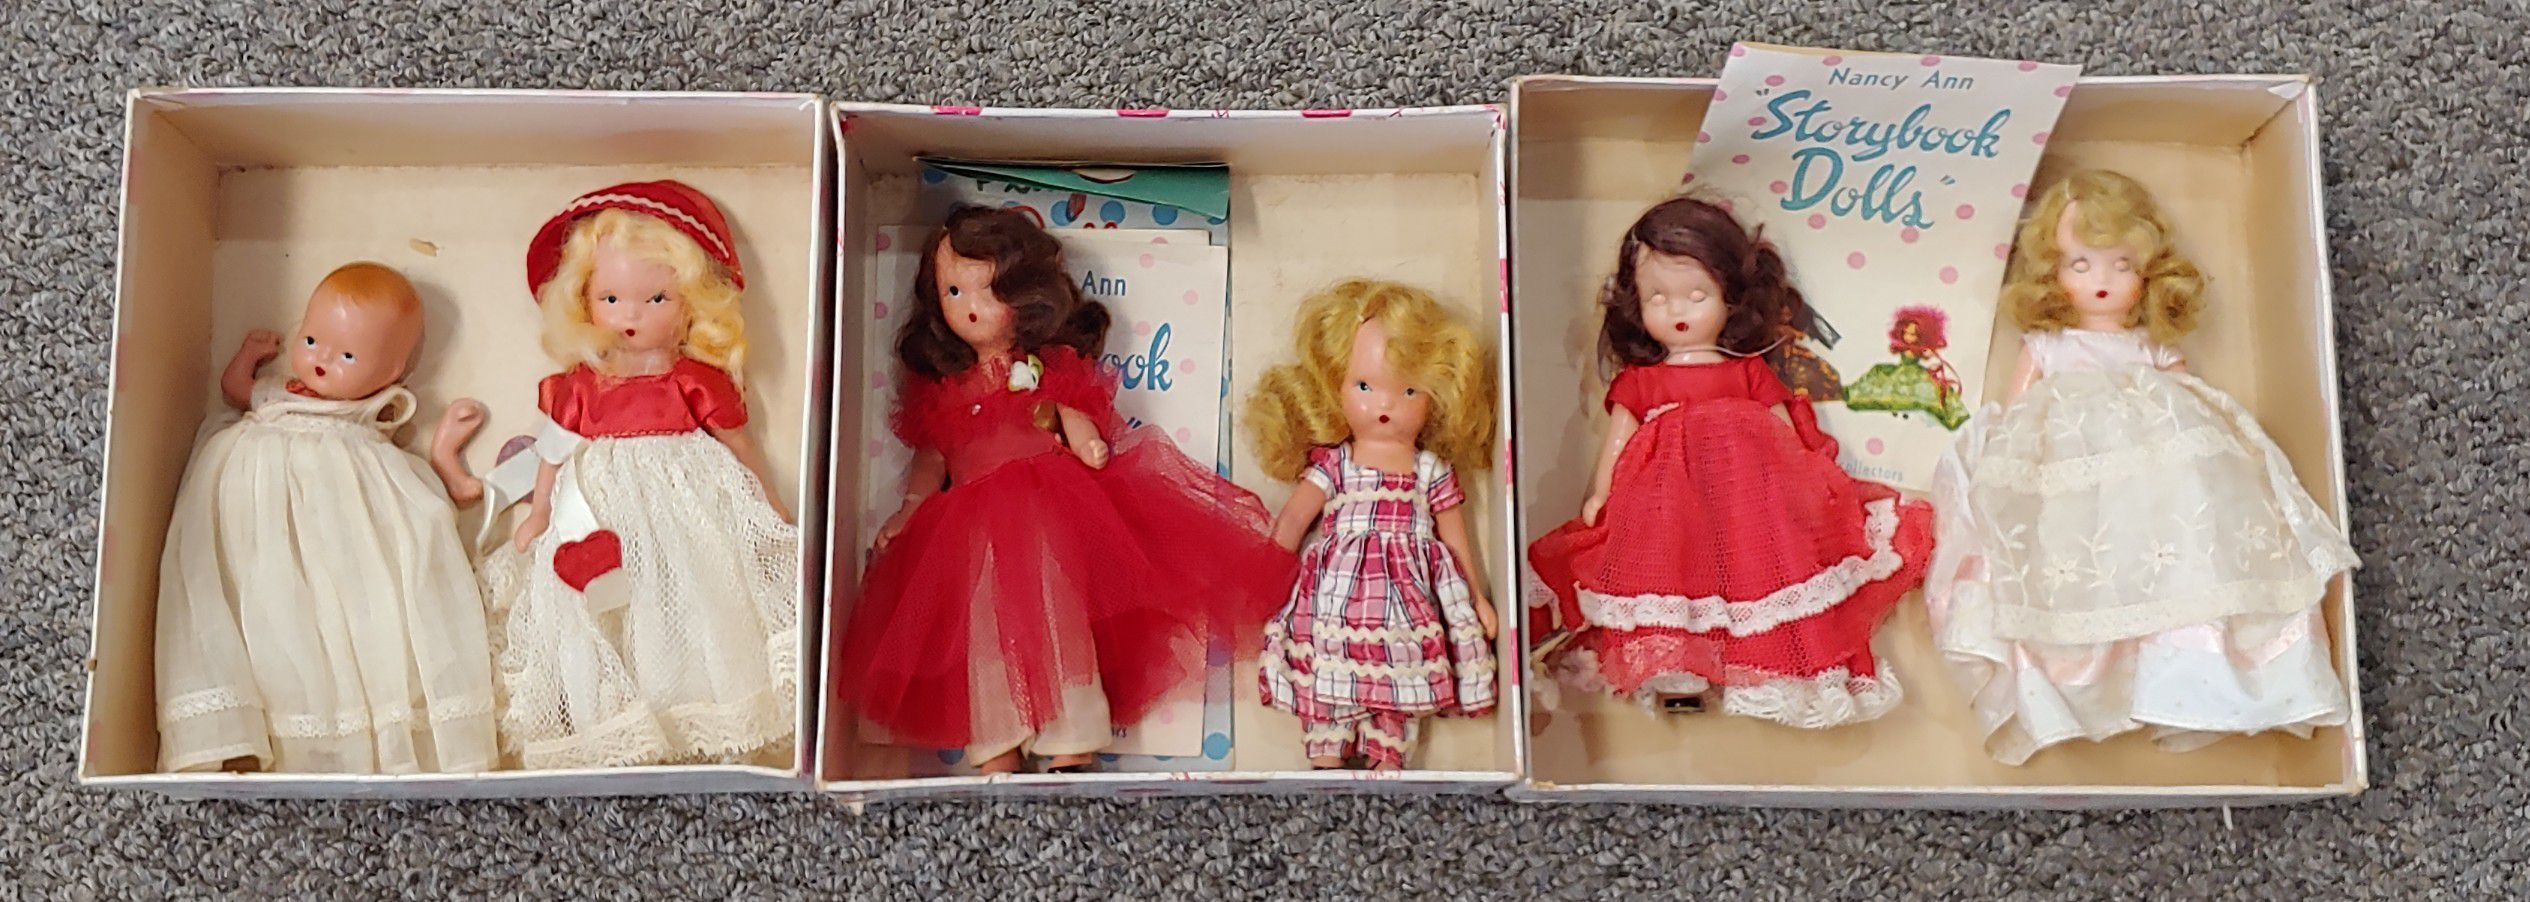 Antique Nancy Ann Story Book Dolls $25.00 Each